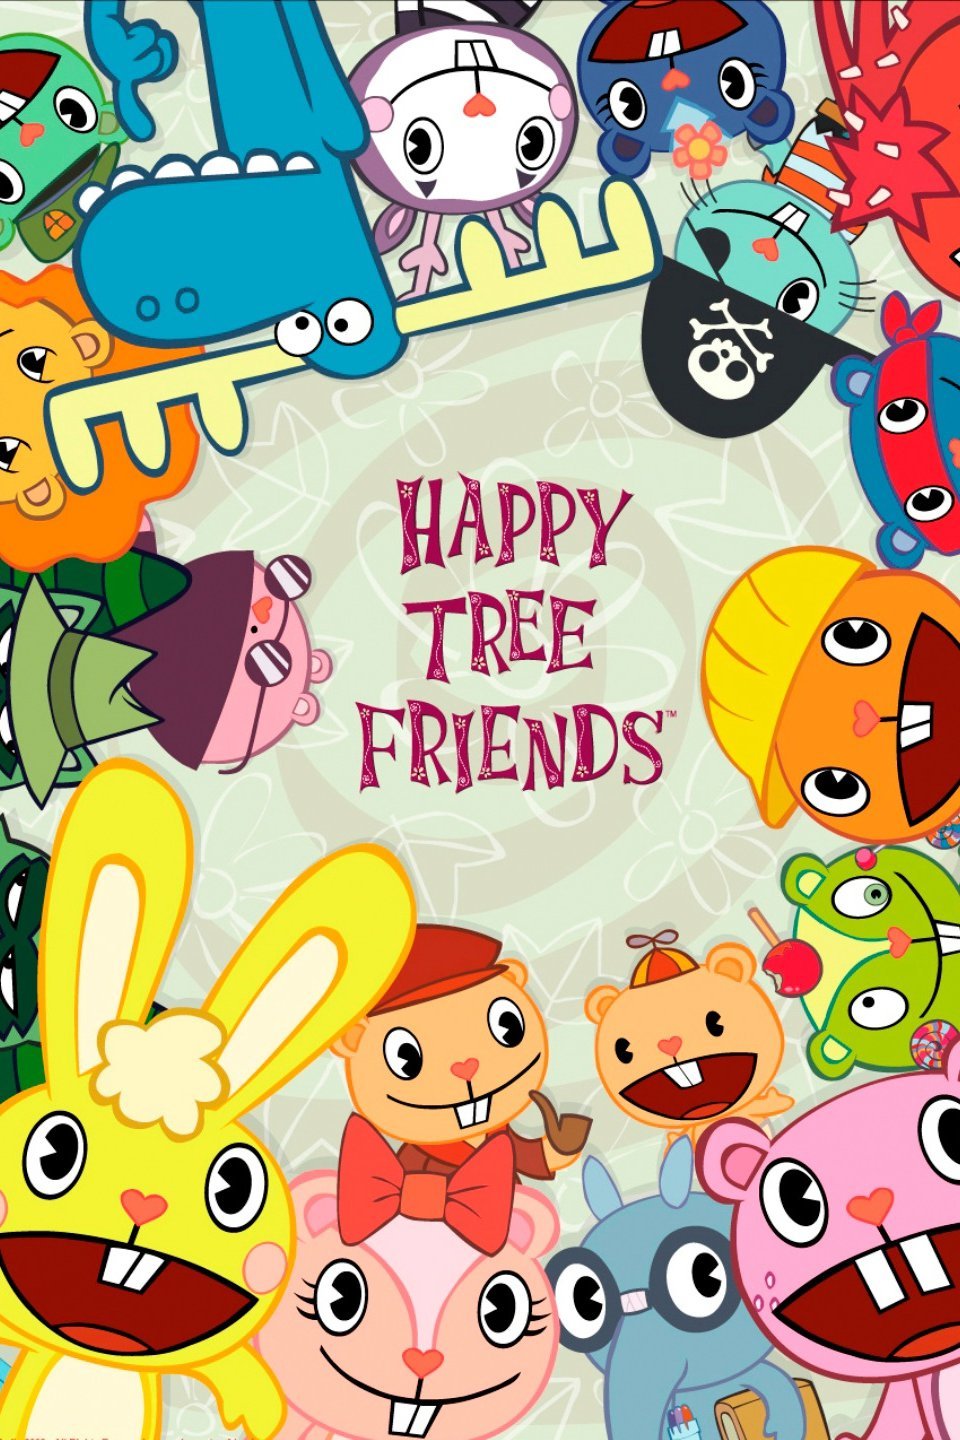 Happy Tree Friends ハッピー ツリー フレンズ Htf ハピツリ のネタバレ解説 考察まとめ 2 5 Renote リノート